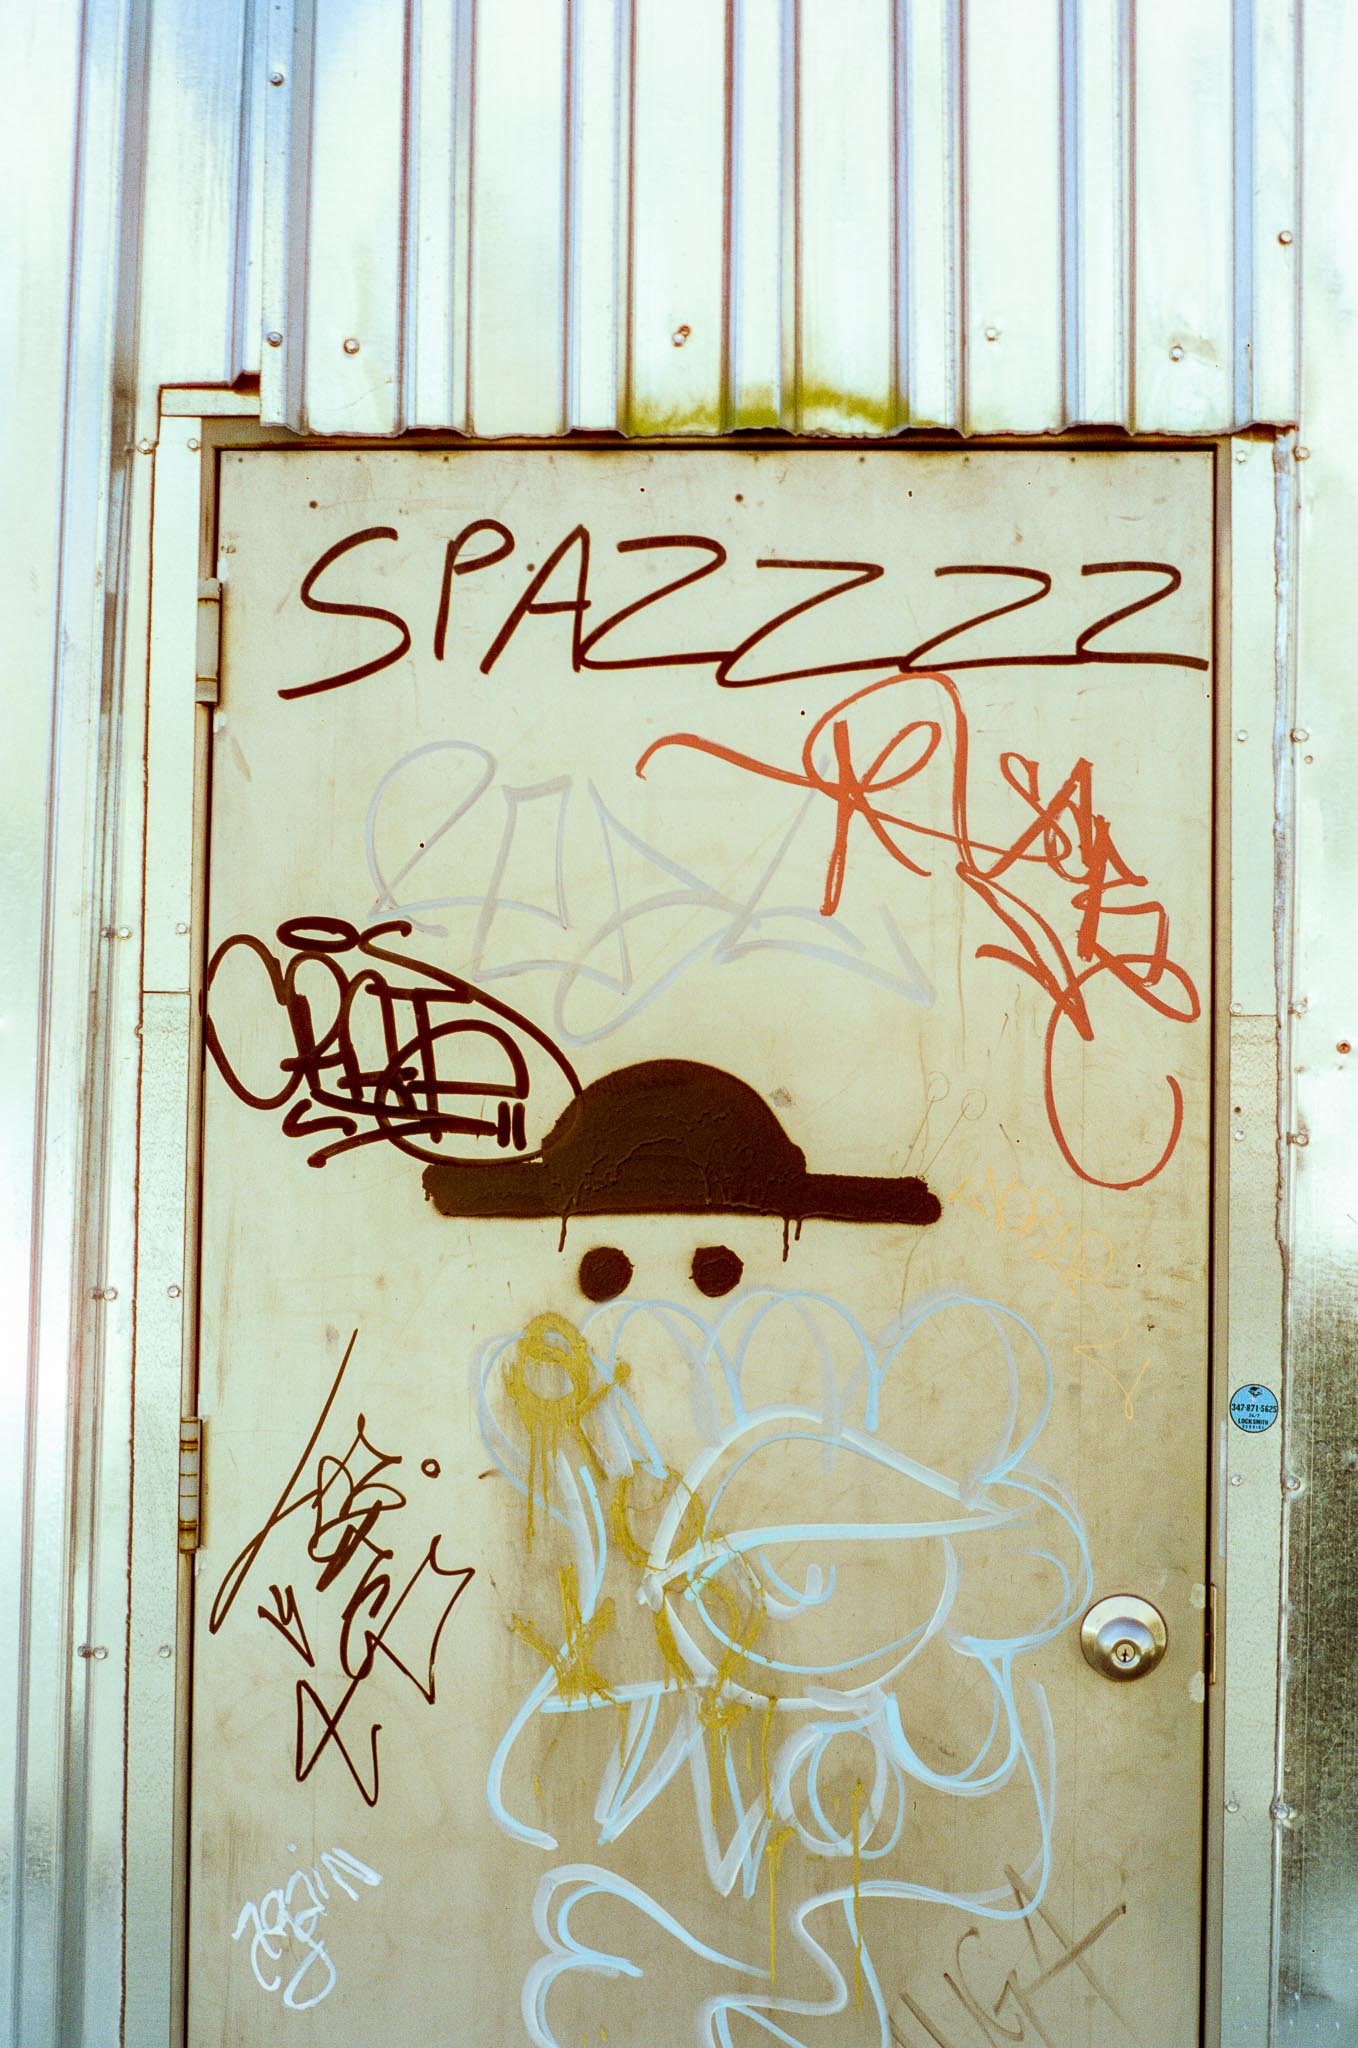 Spazzzz-Graffiti-Brooklyn.jpg